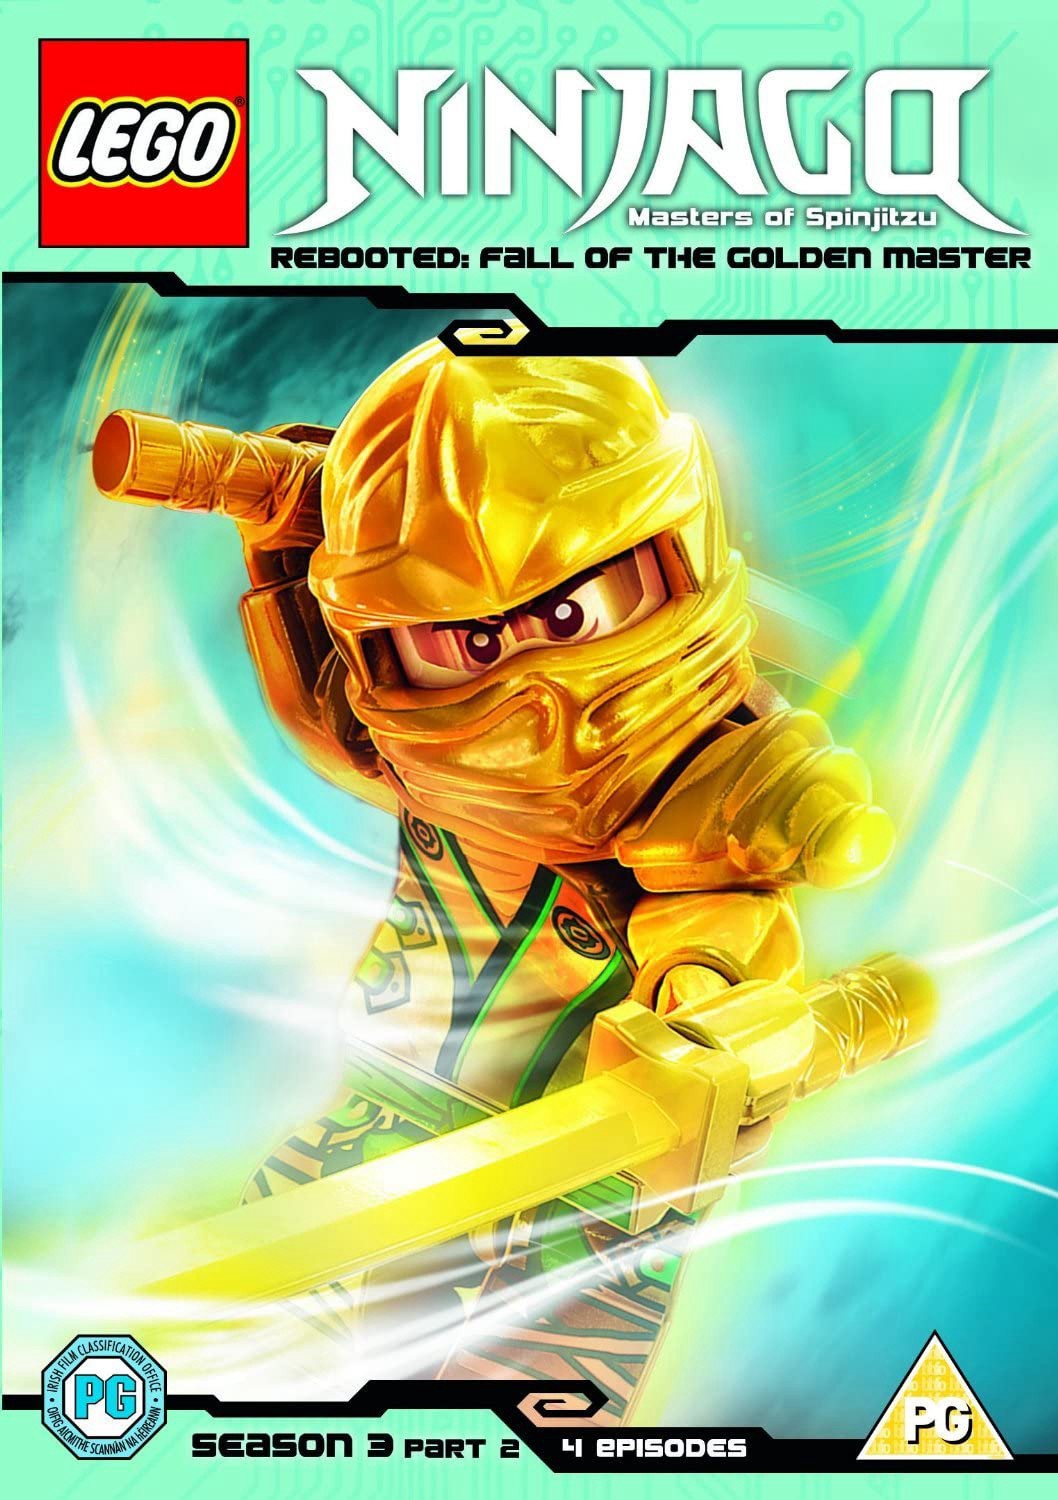 LEGO Ninjago (Phần 3 - Part 2) 2020